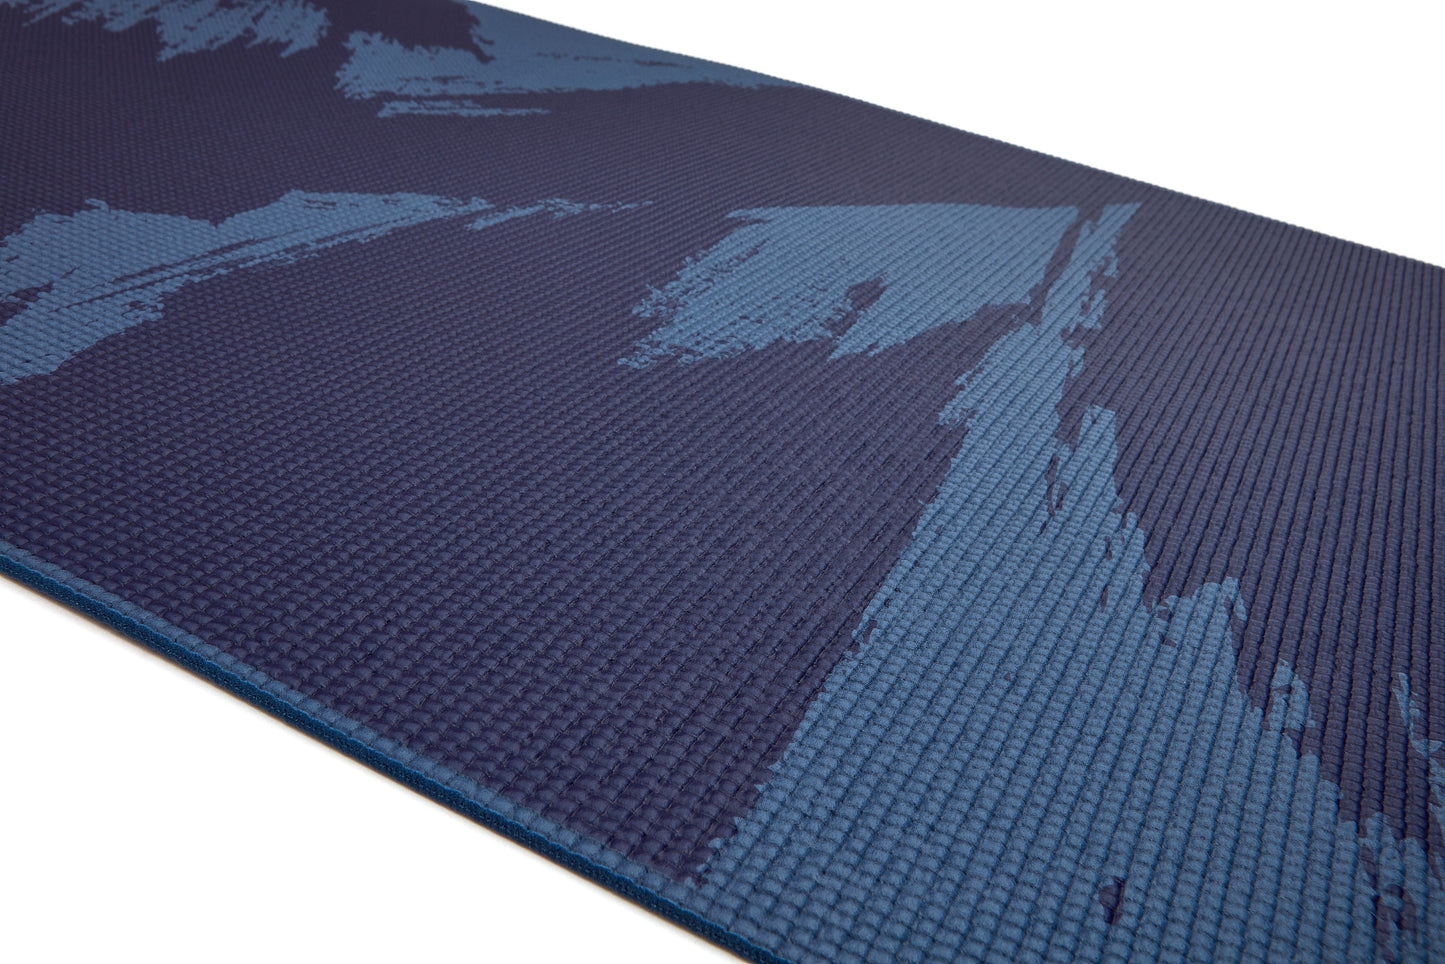 mat para yoga de doble cara reebok 4 mm azul